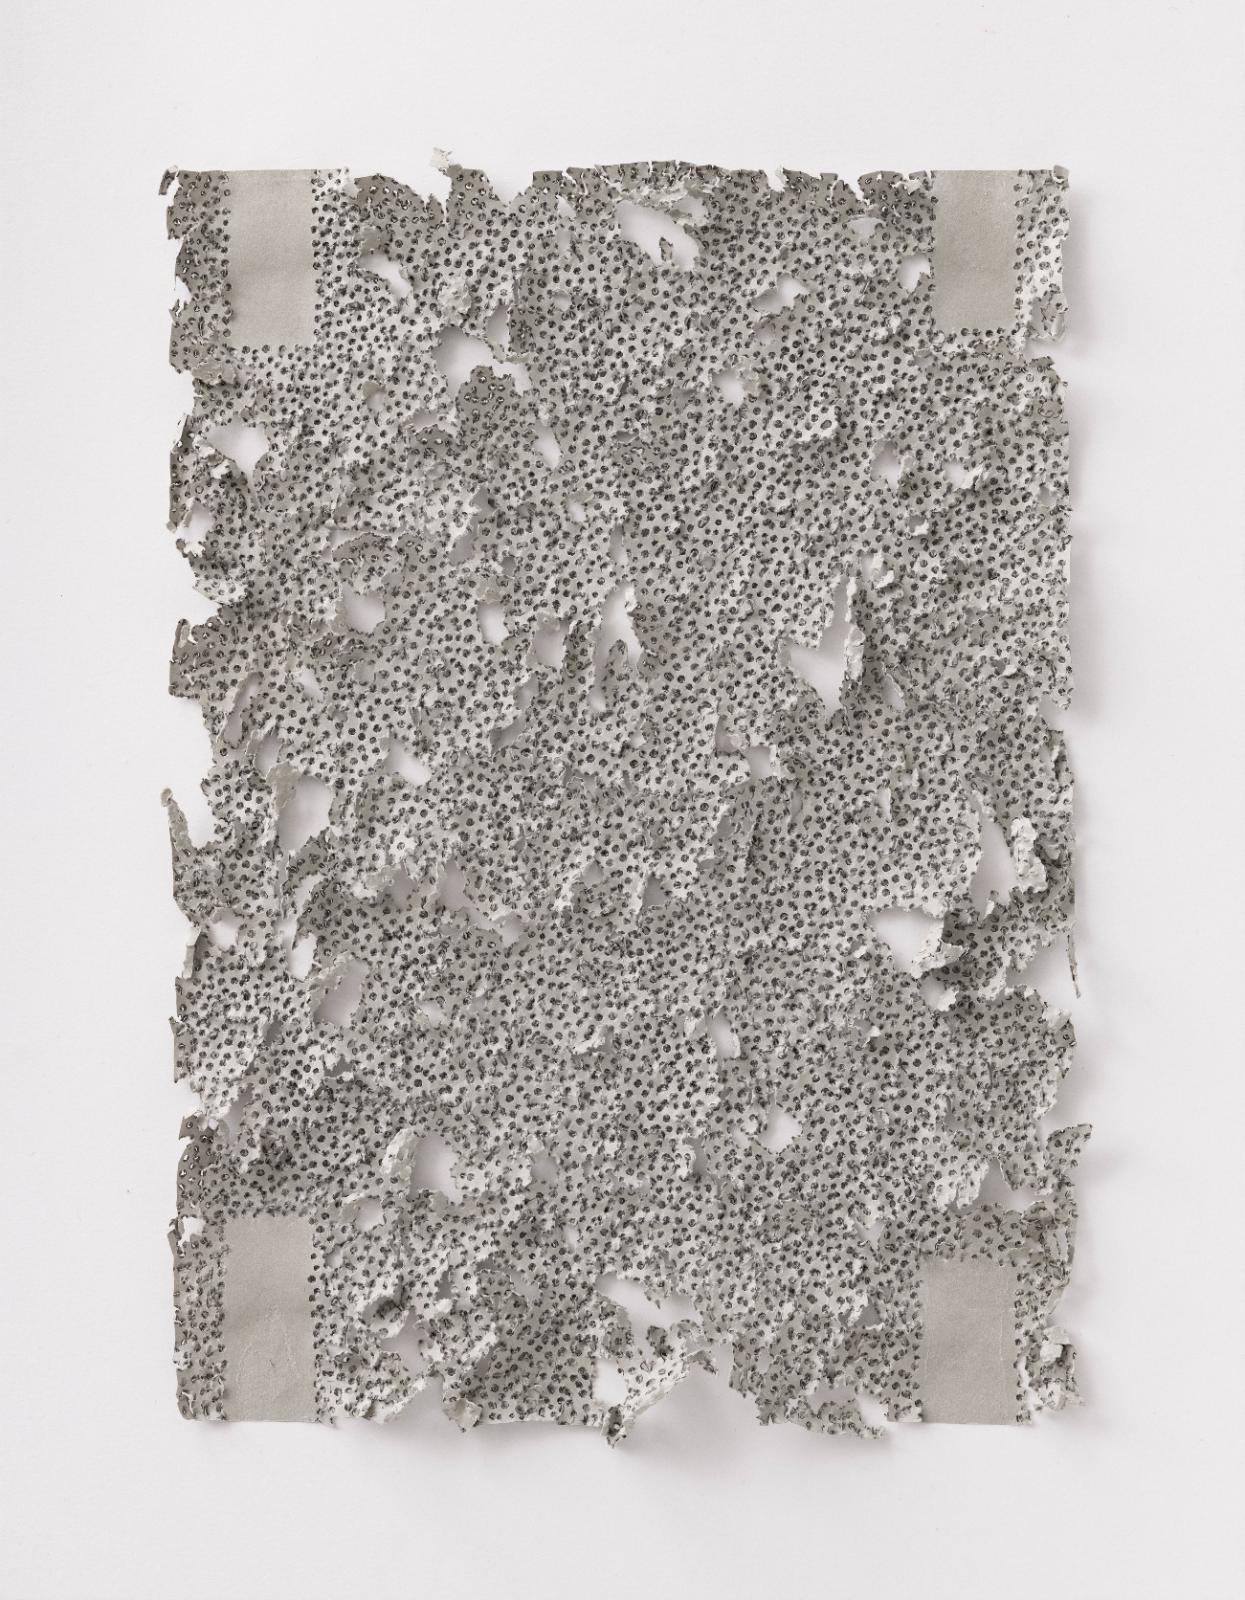 Martin Bruno Schmid, Bleistiftspitze in Papier #2, 2020, Bleistift in Papier, 41 × 31 cm, verkauft!